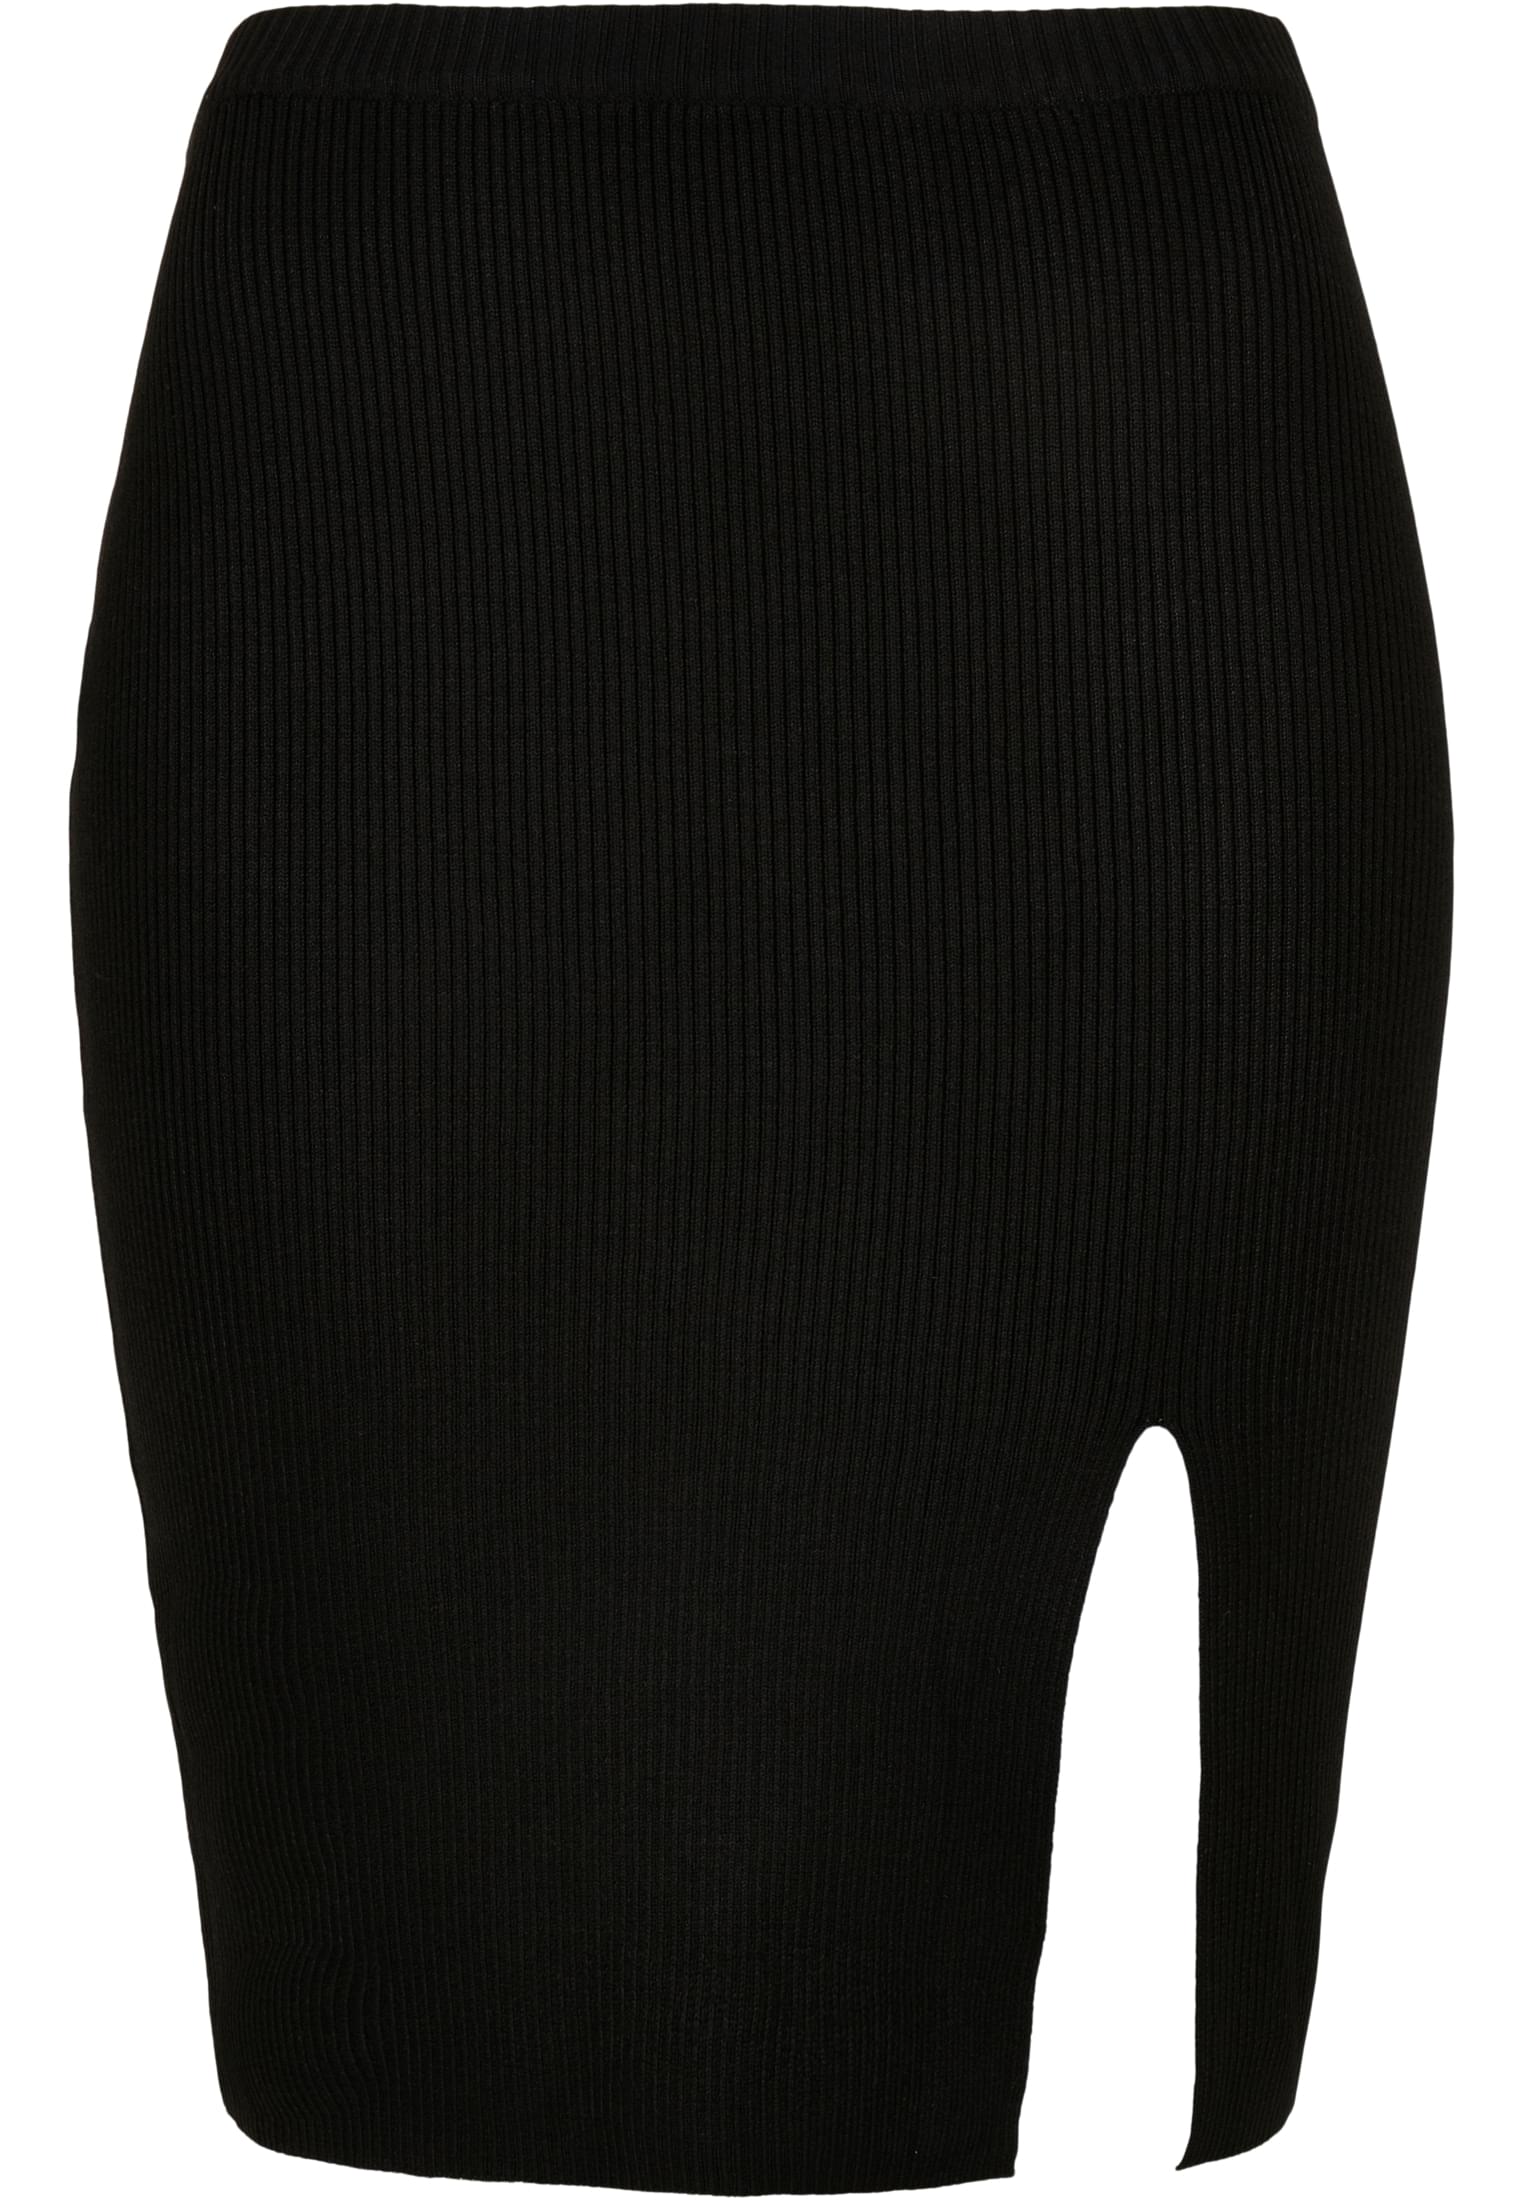 Kleider & R?cke Ladies Rib Knit Skirt in Farbe black